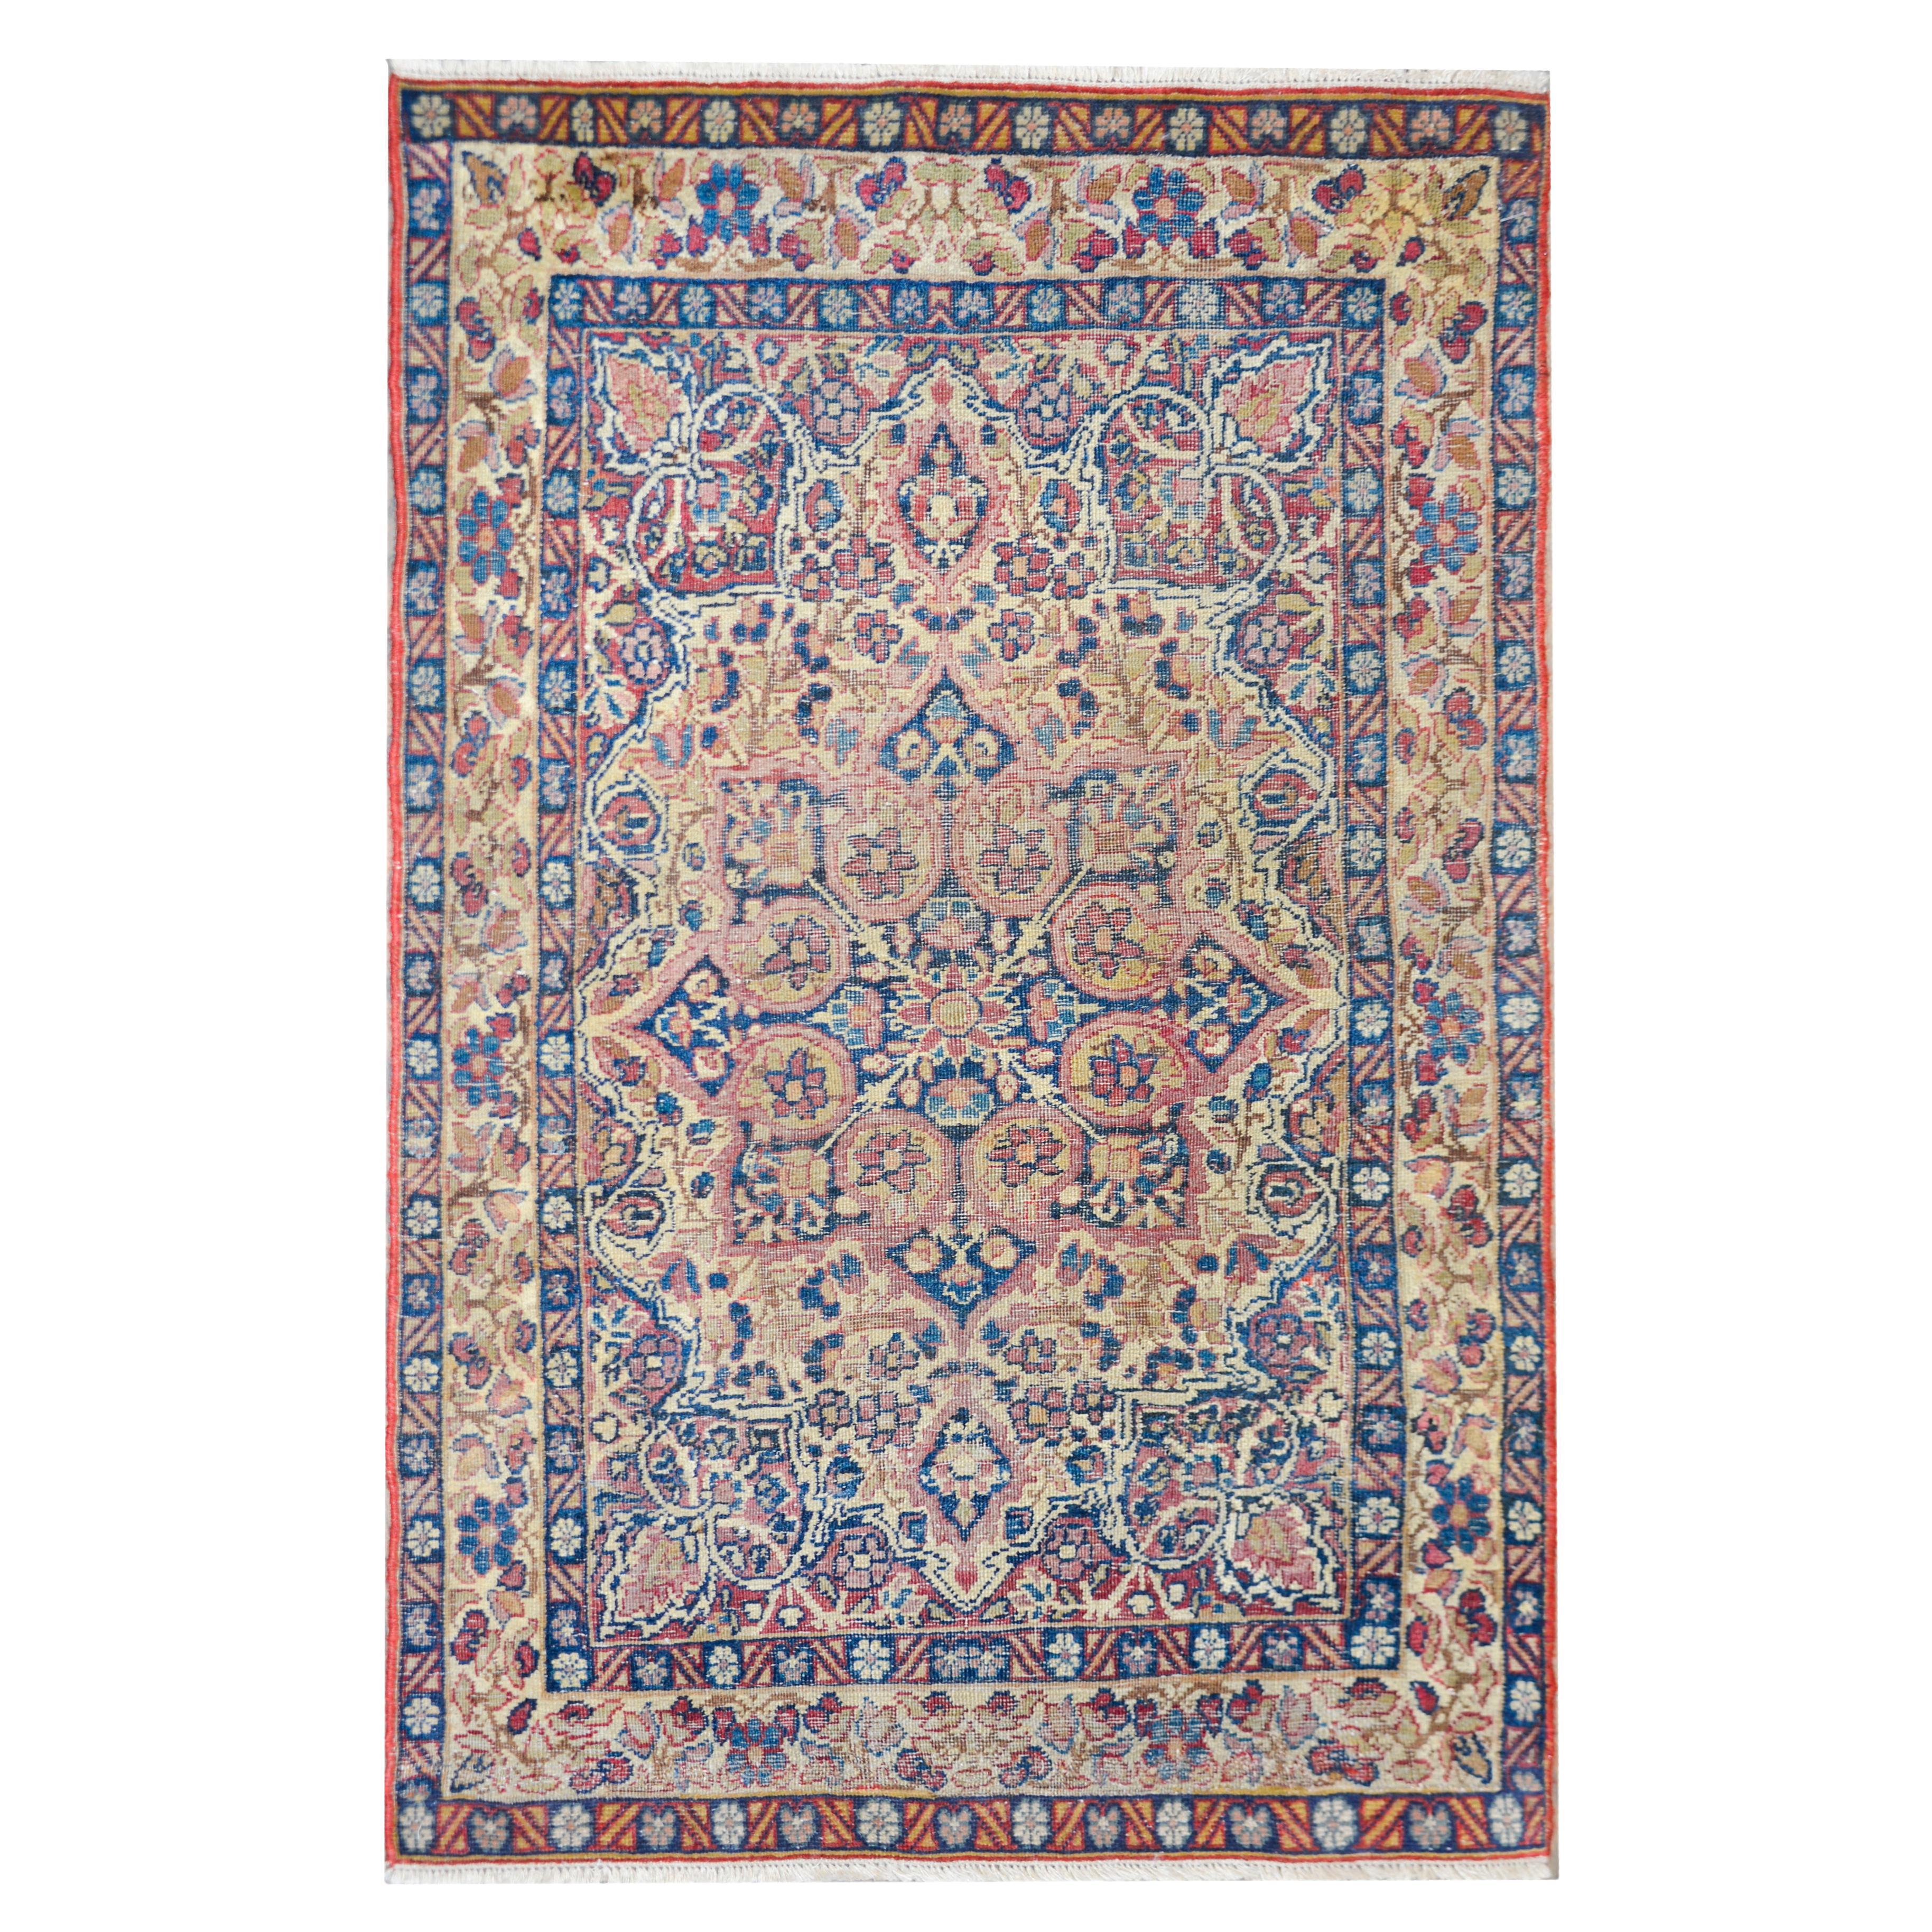 Lavar Kirman-Teppich aus dem frühen 20. Jahrhundert